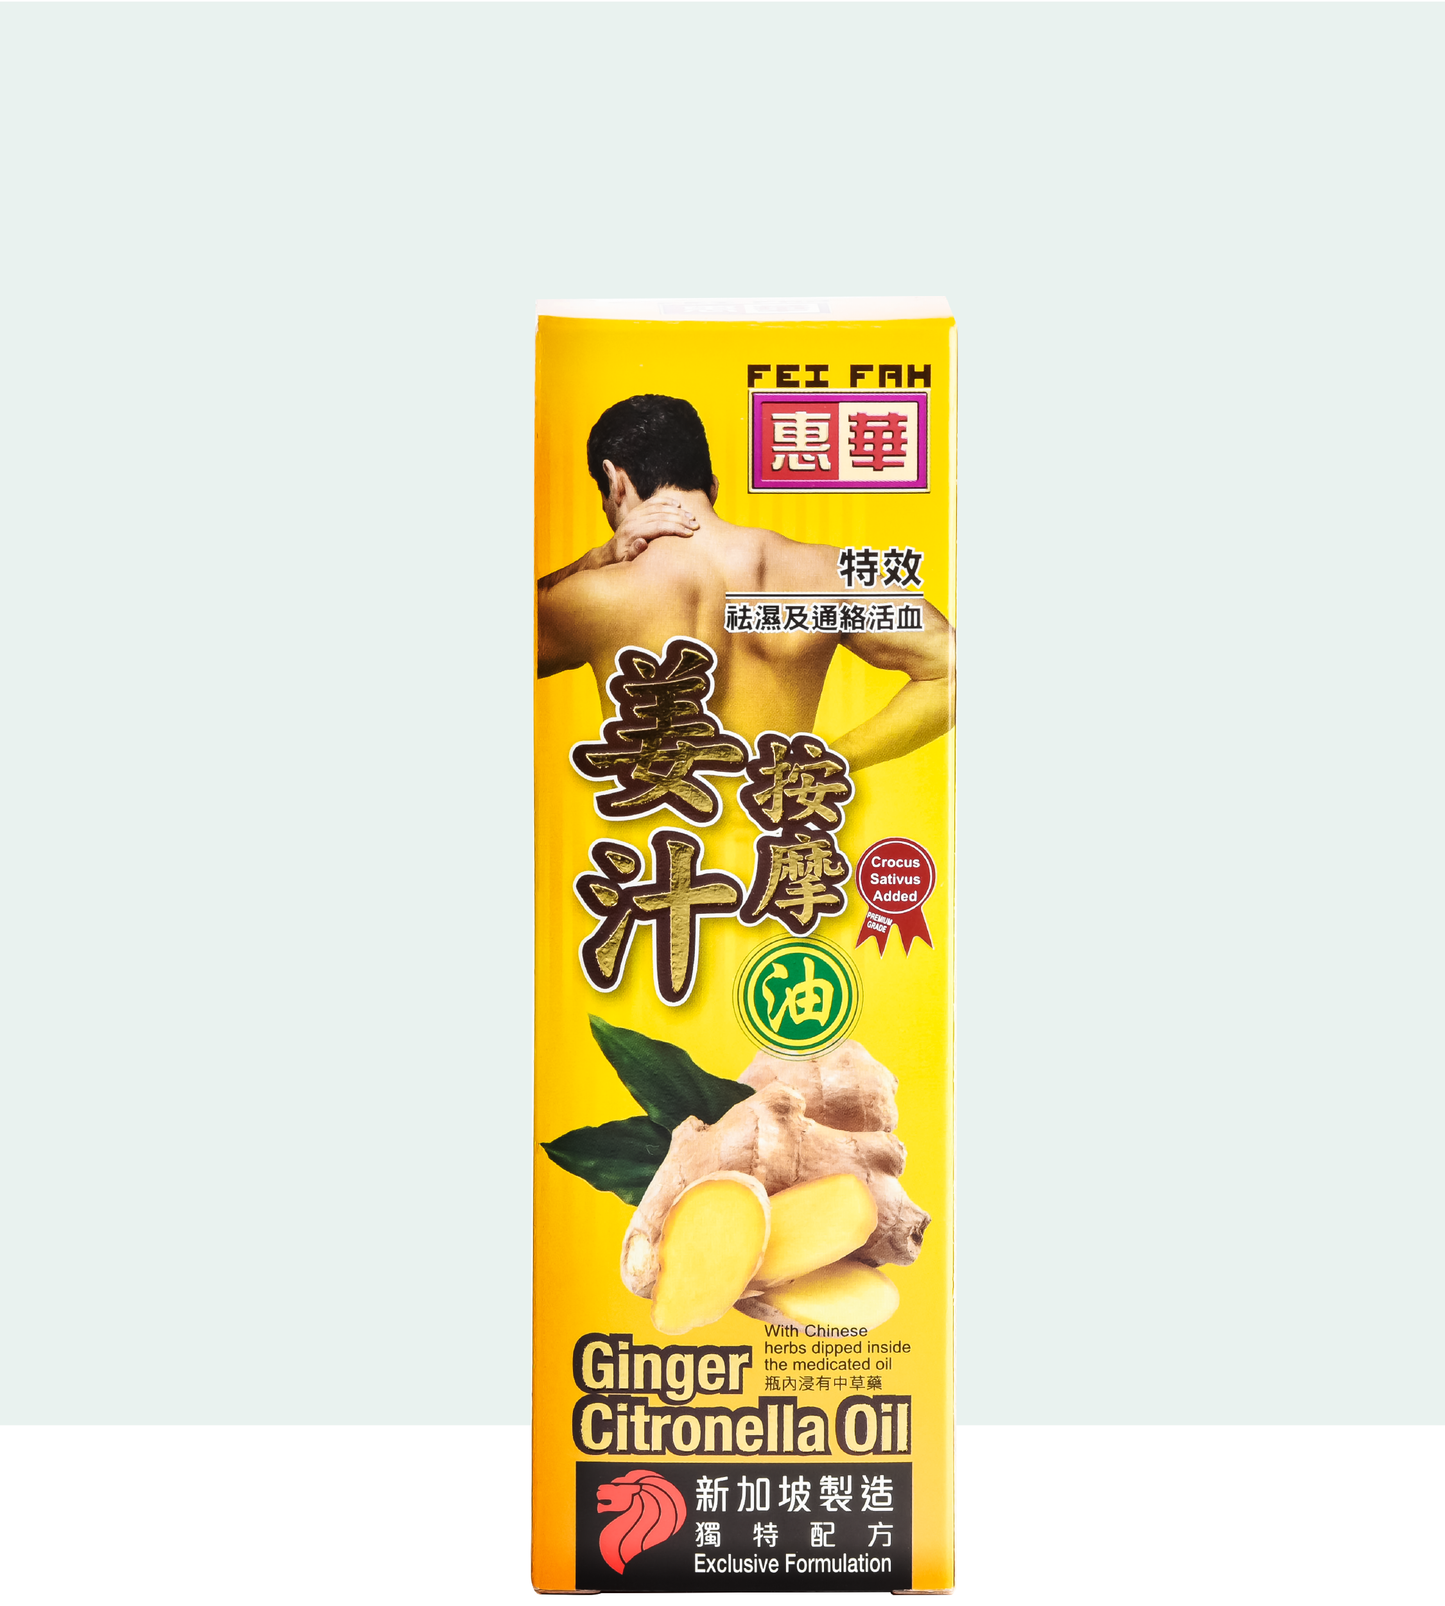 Fei Fah Ginger Citronella Oil 50ml - Fei Fah Medical Manufacturing Pte. Ltd. 